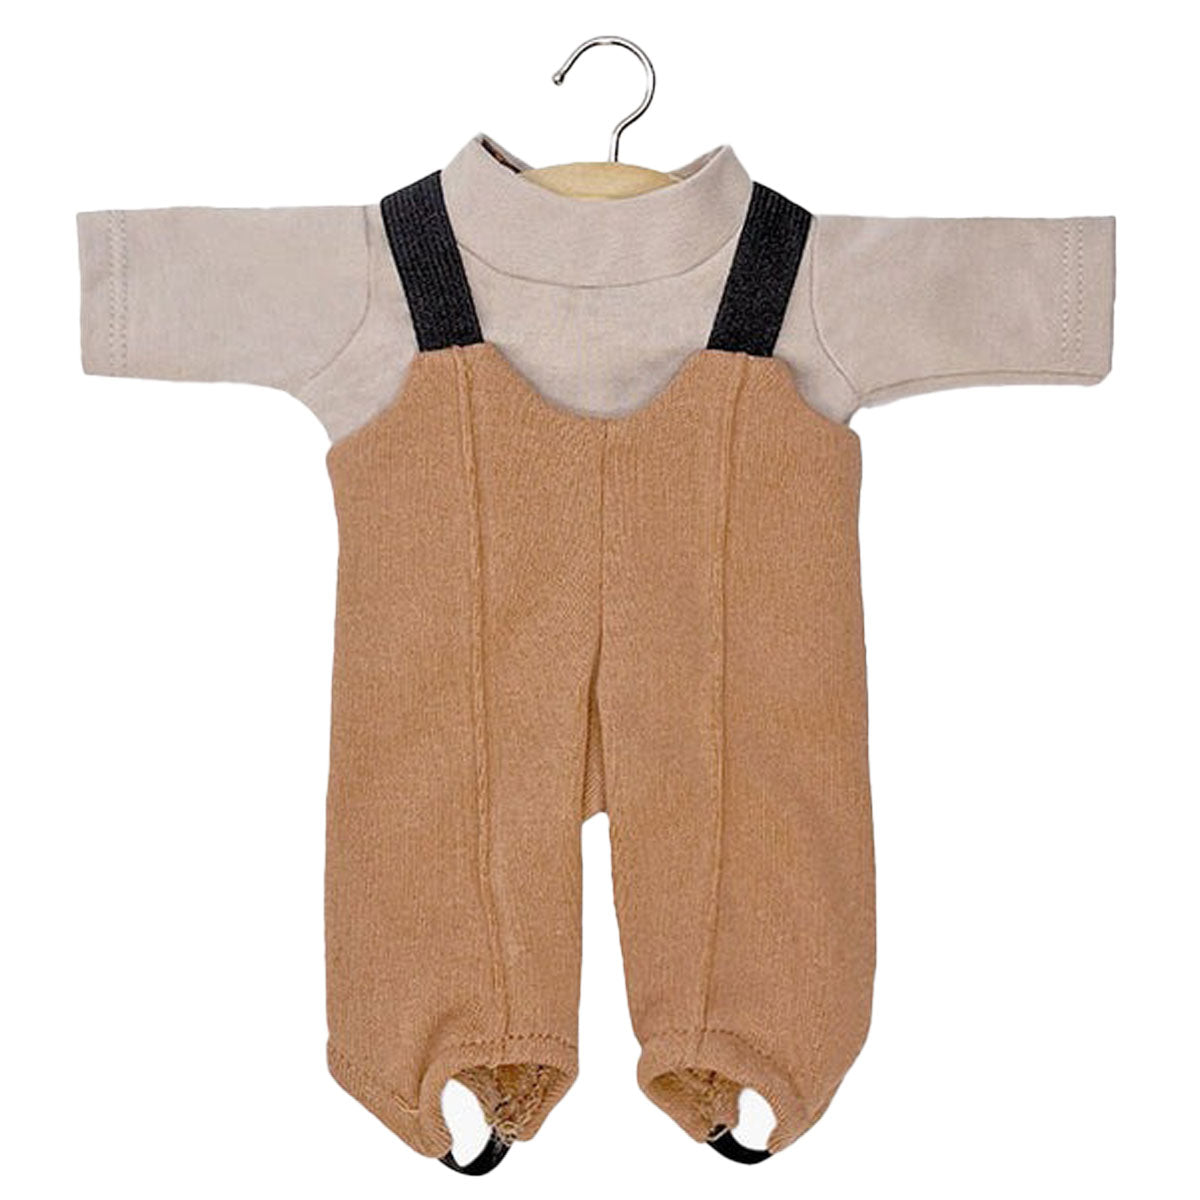 Minikane Doll Clothing - Popeye Spindle Set - Brown Sugar Fleece / Linen Jersey